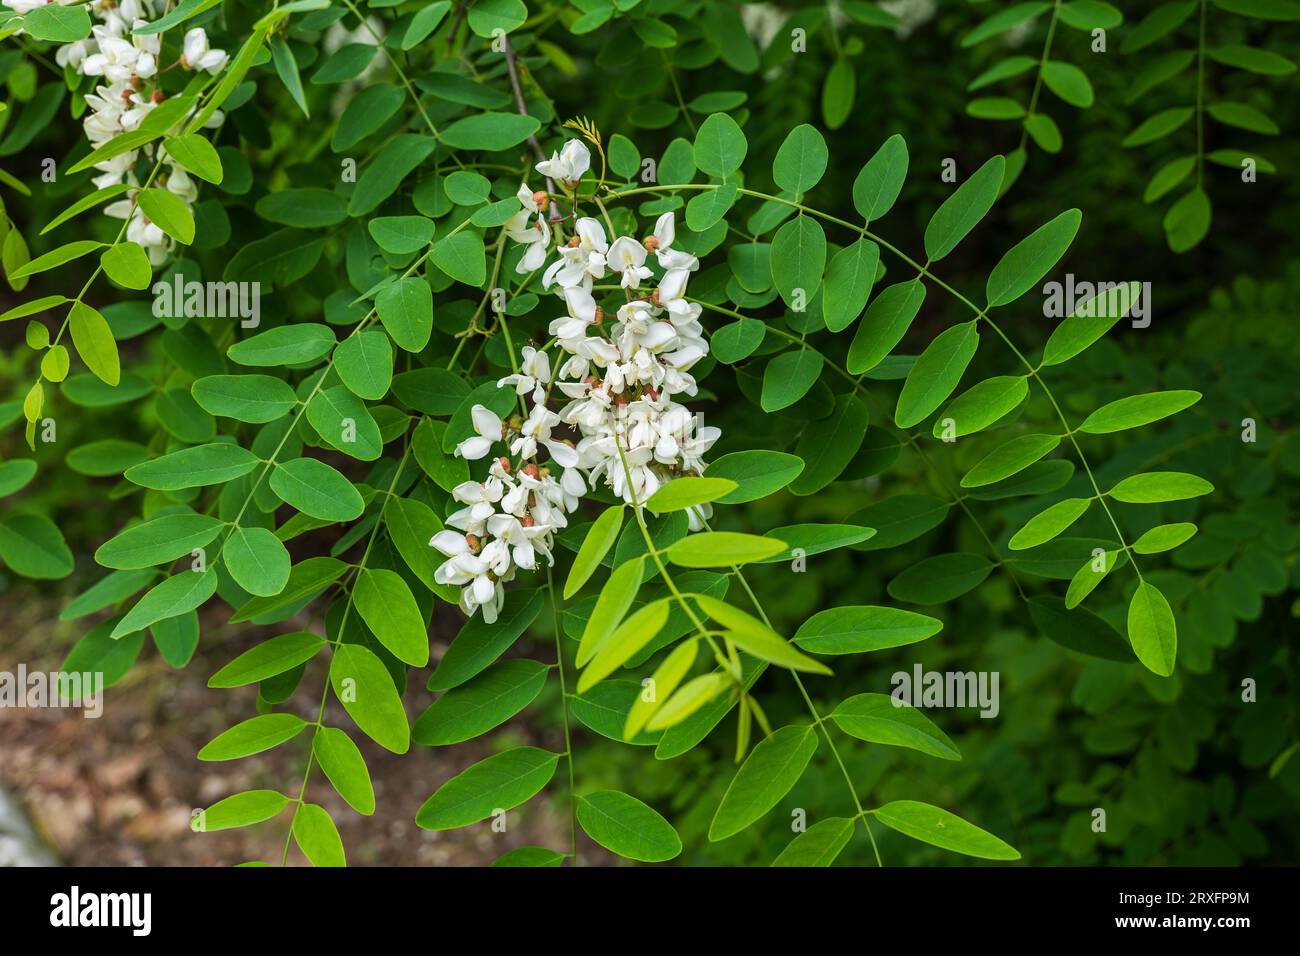 White flowers and leaves of Robinia pseudoacacia, also called false acacia or black locust, deciduous tree in pea family Fabaceae. Stock Photo